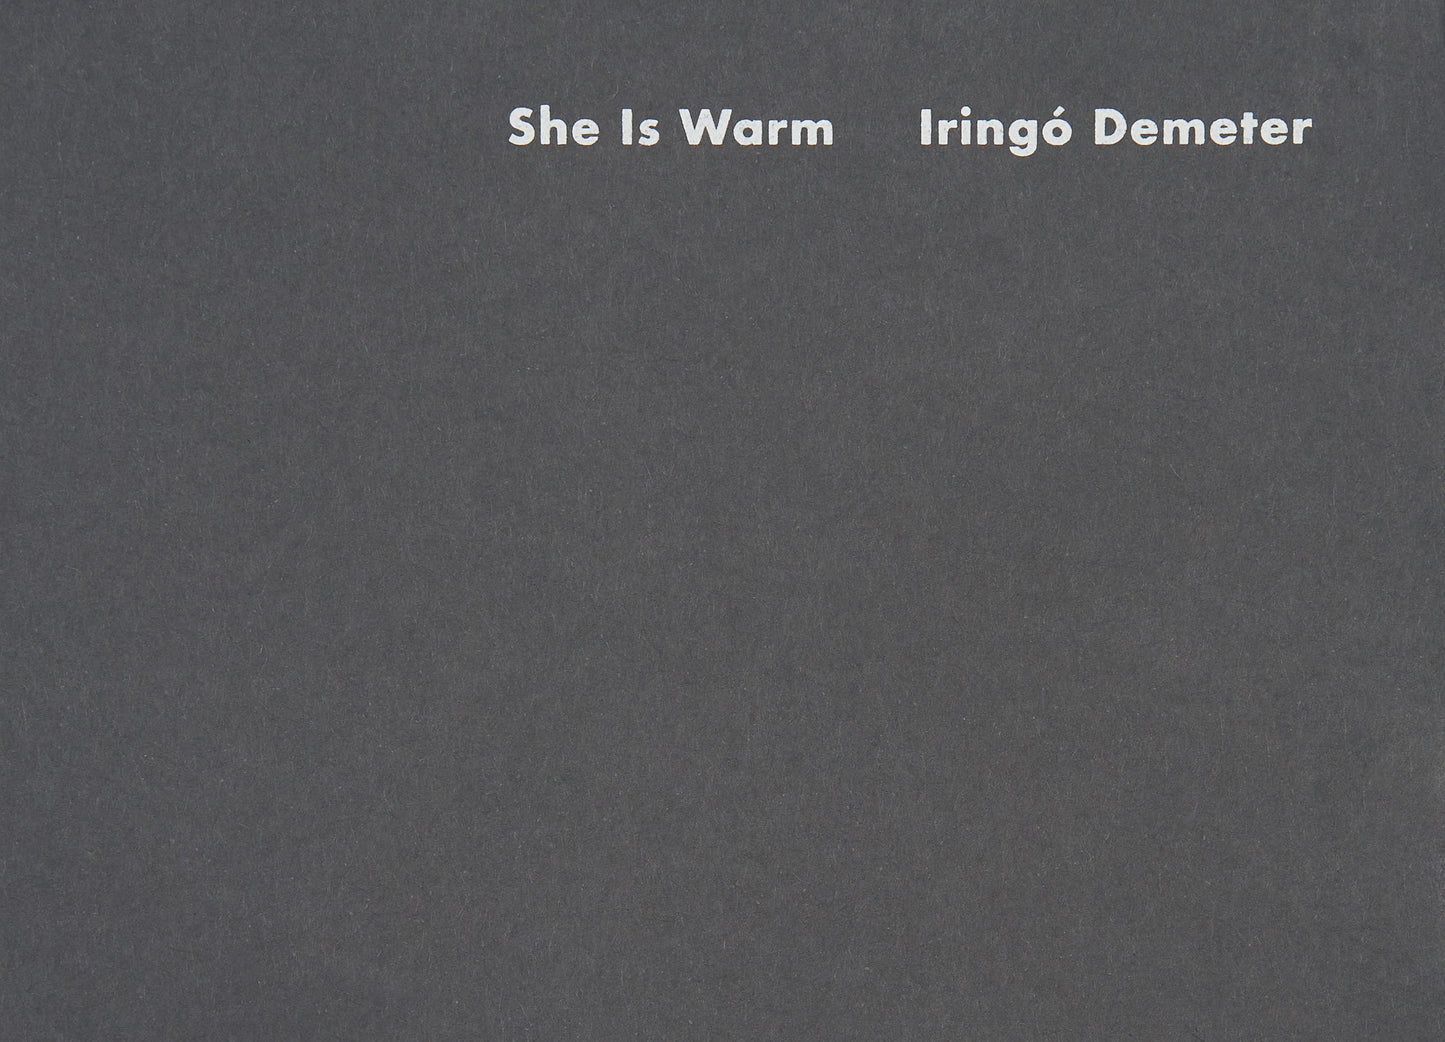 Iringó Demeter - She Is Warm